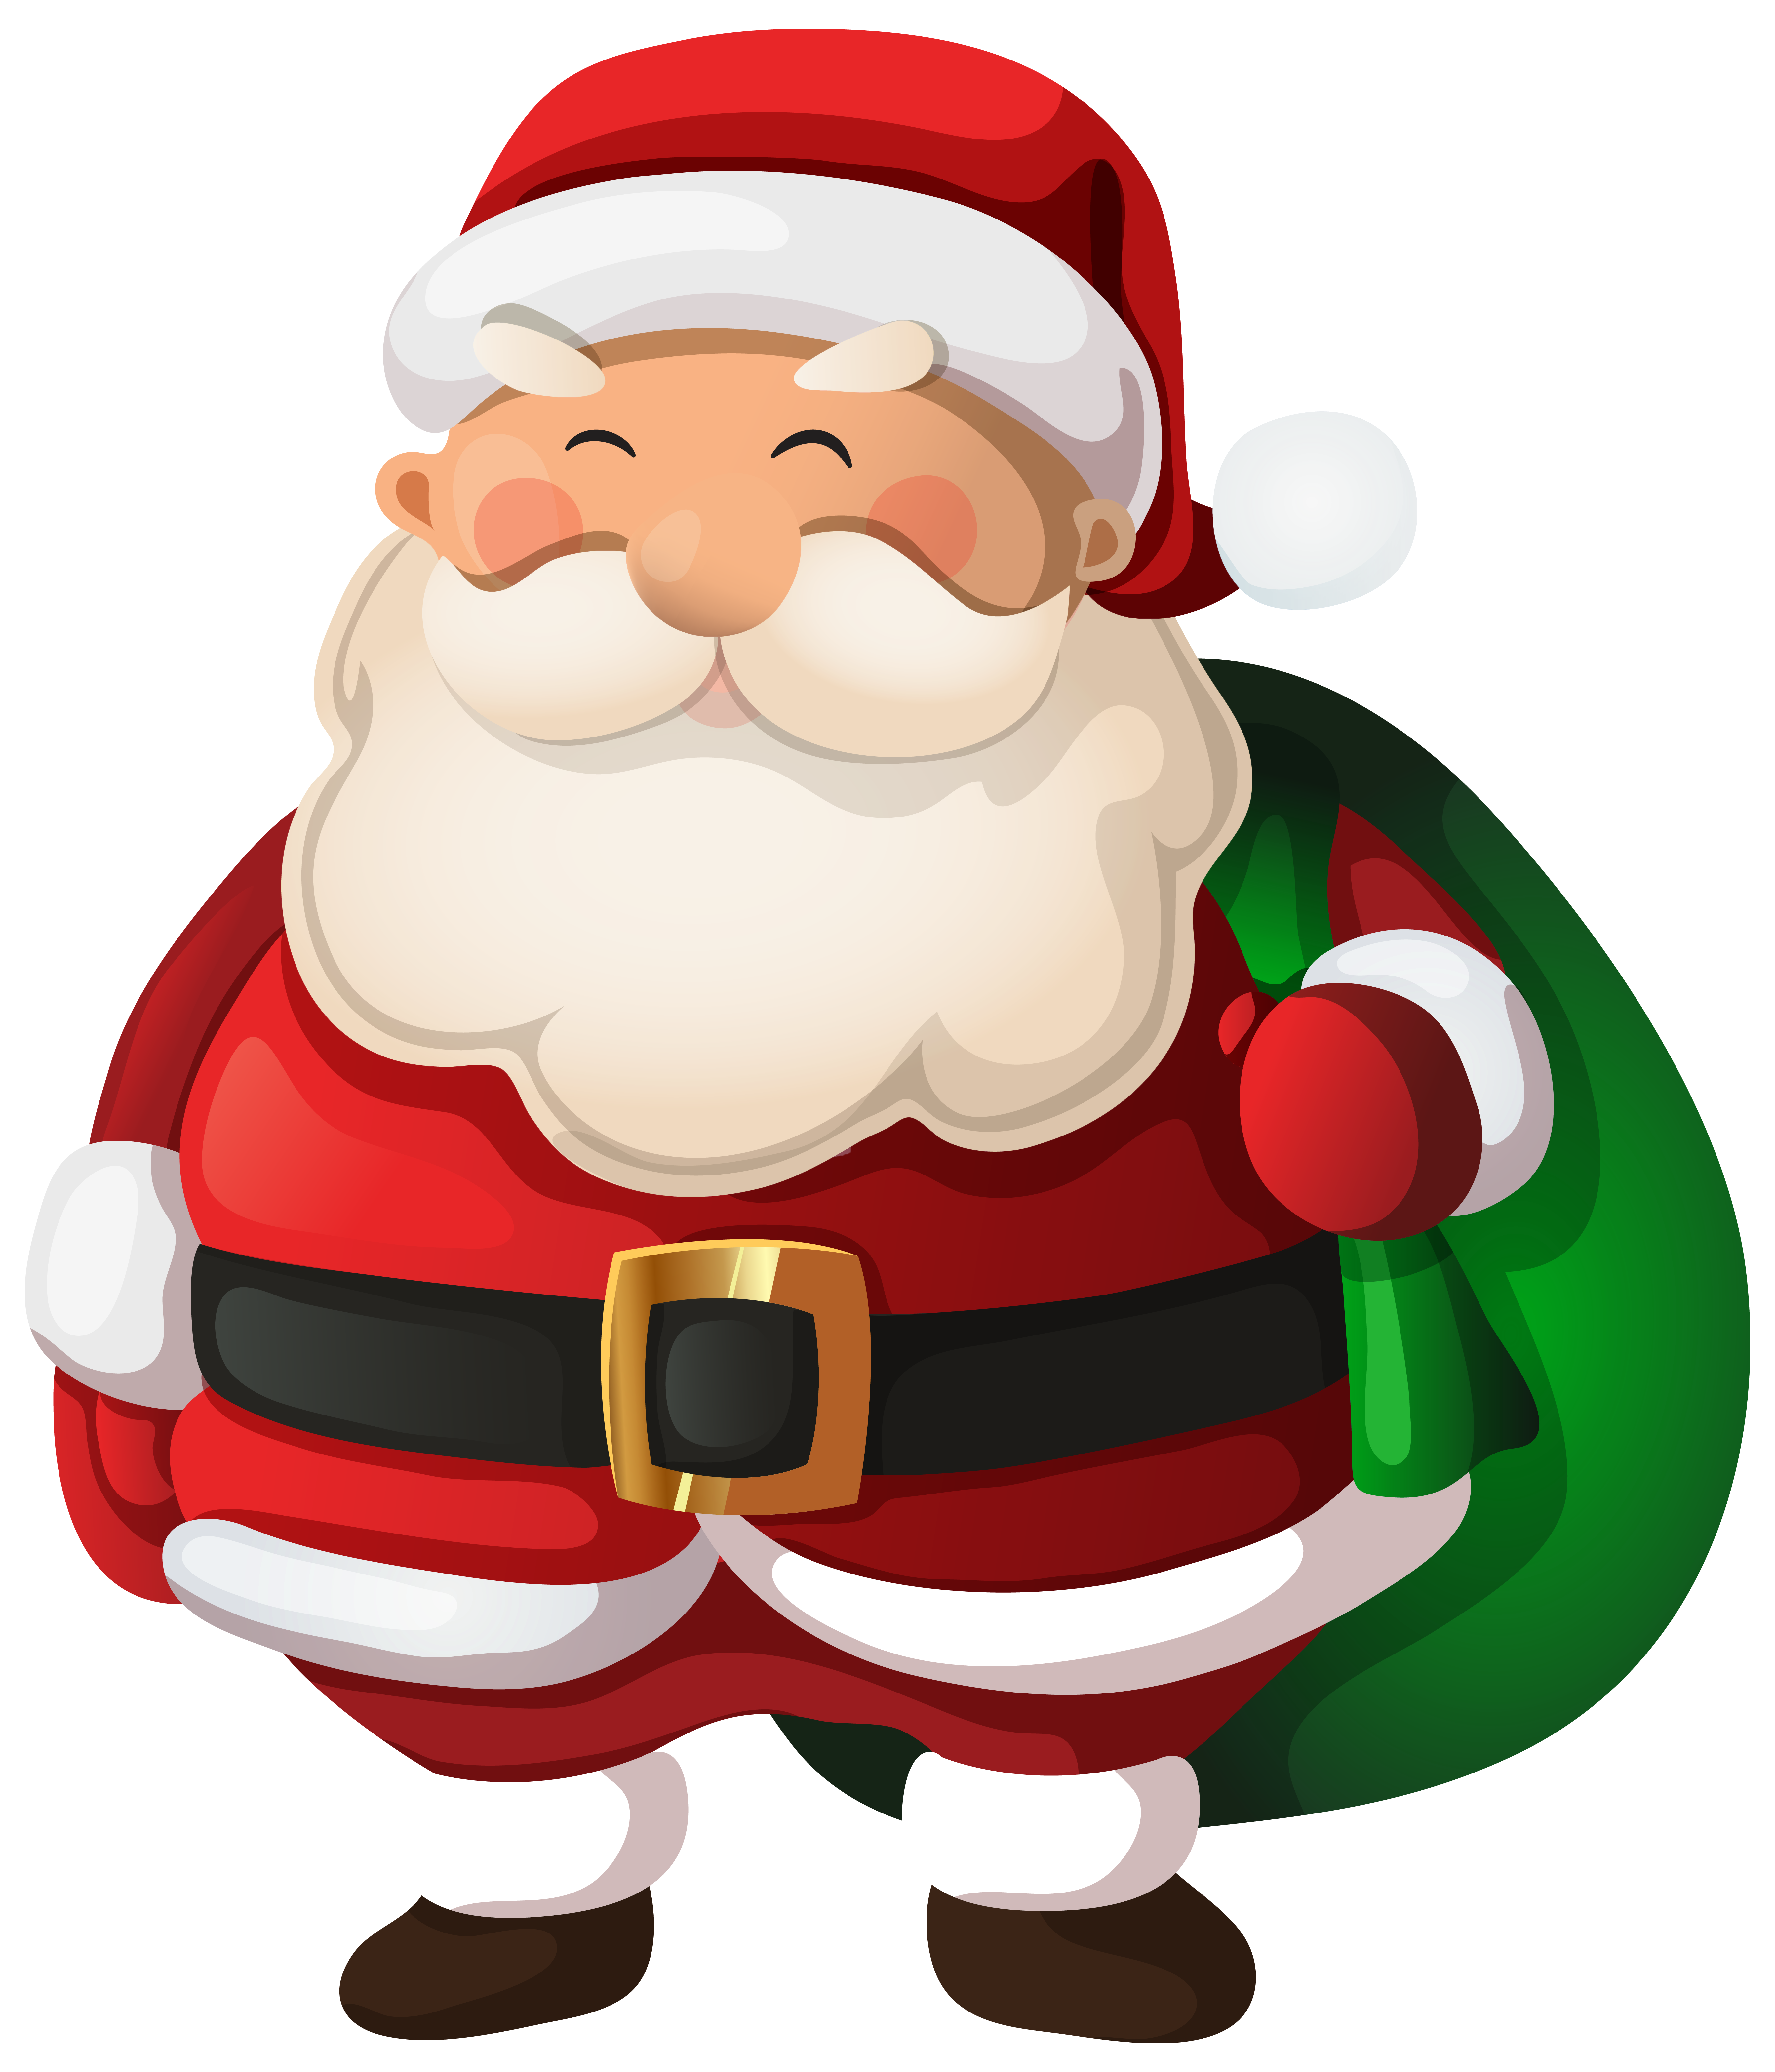 Santa Claus clipart in chimne